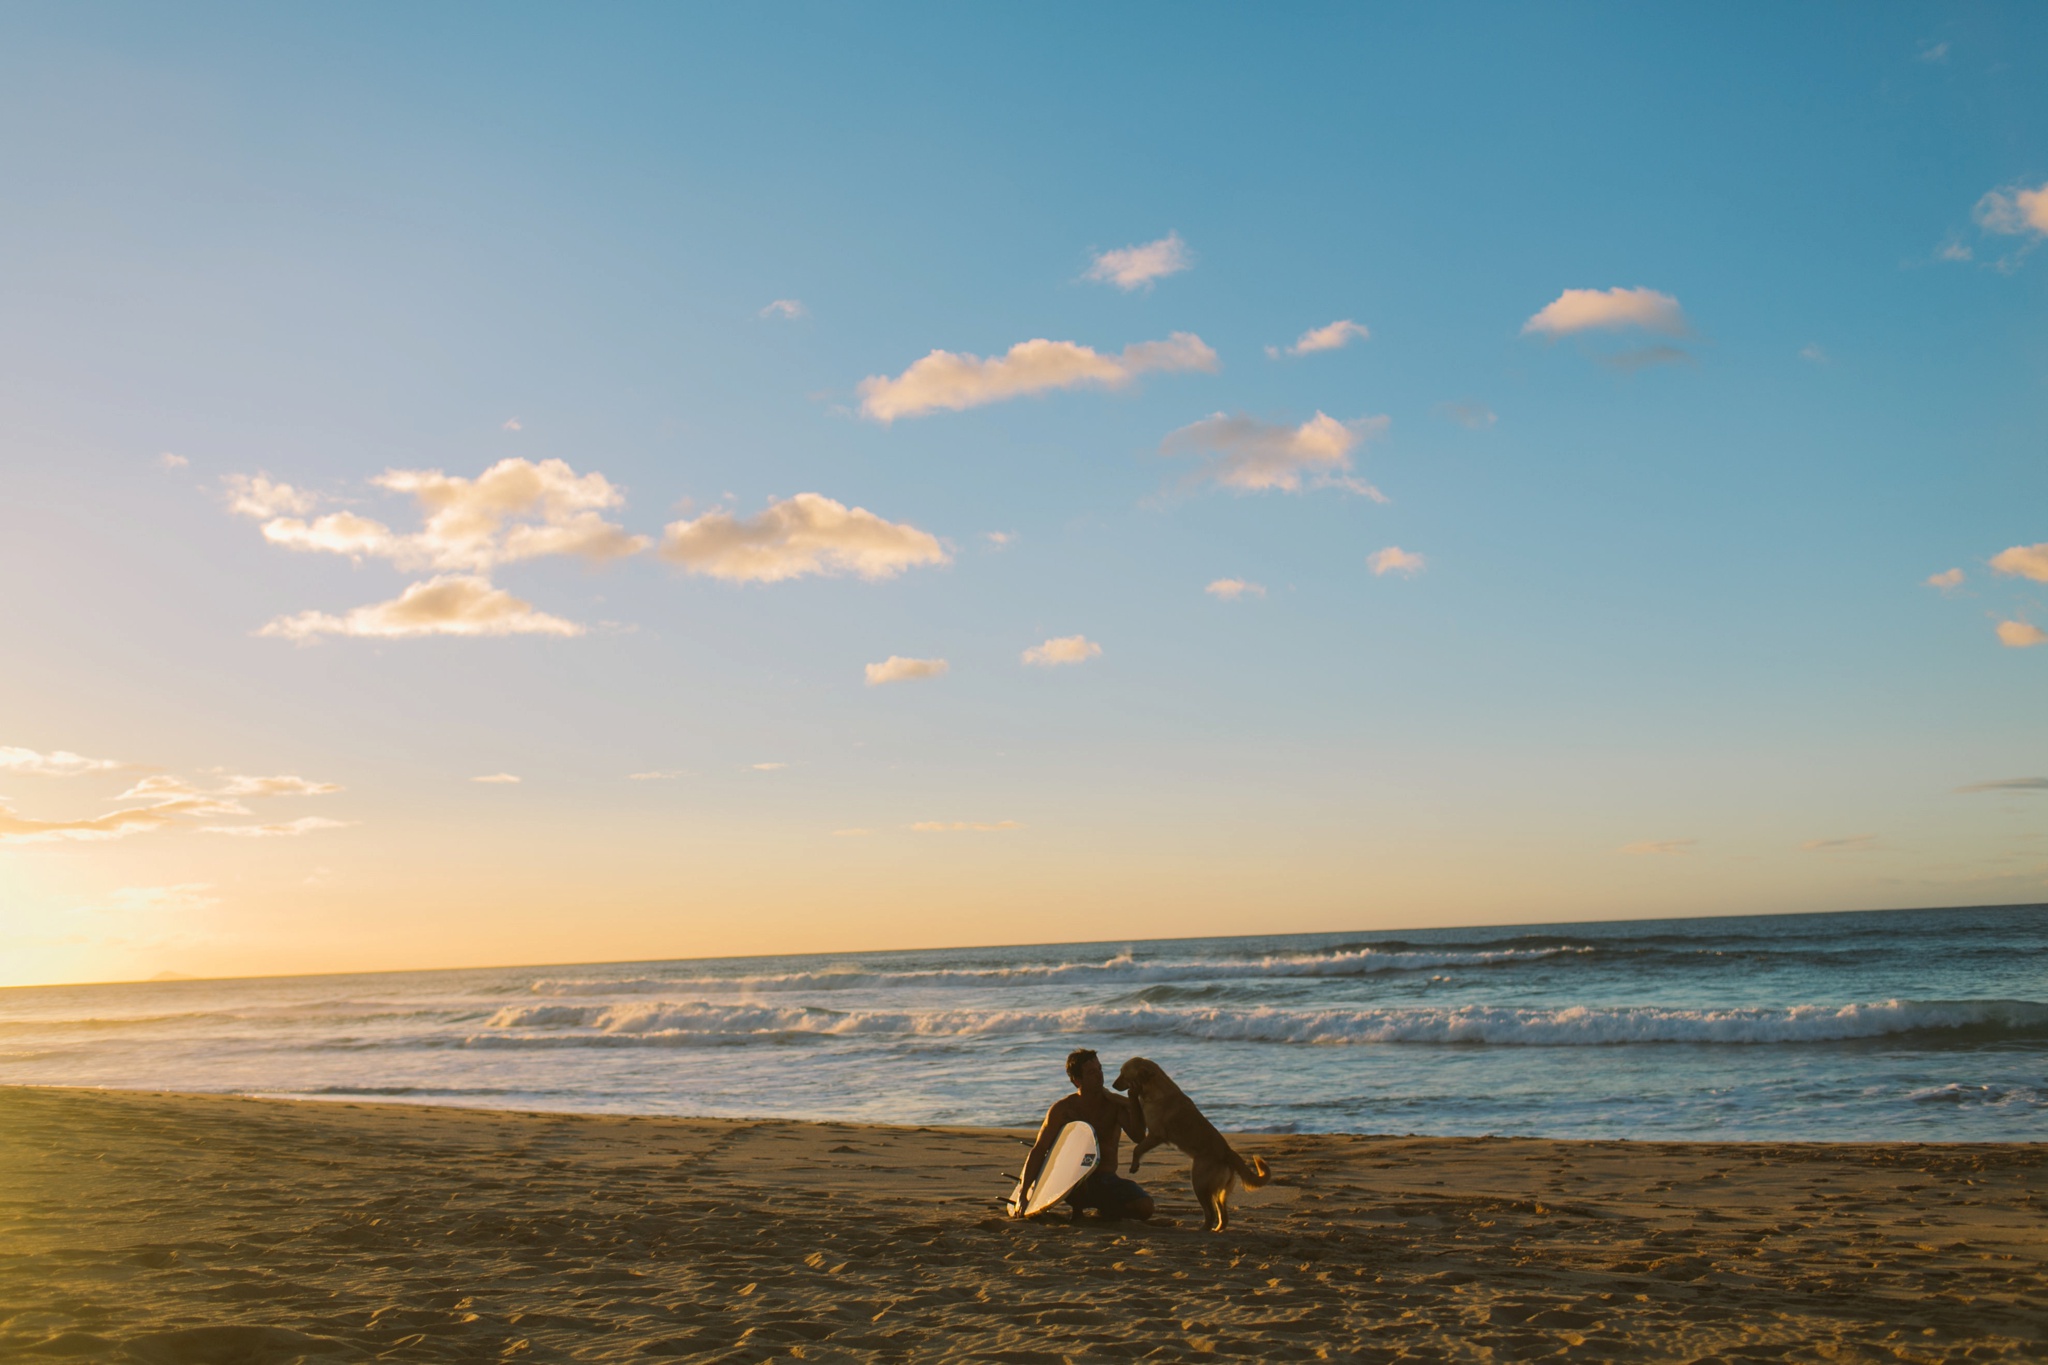 Kauai Hawaii Christmas Vacation Surfing Polihale Beach at Sunset with Golden Retriever